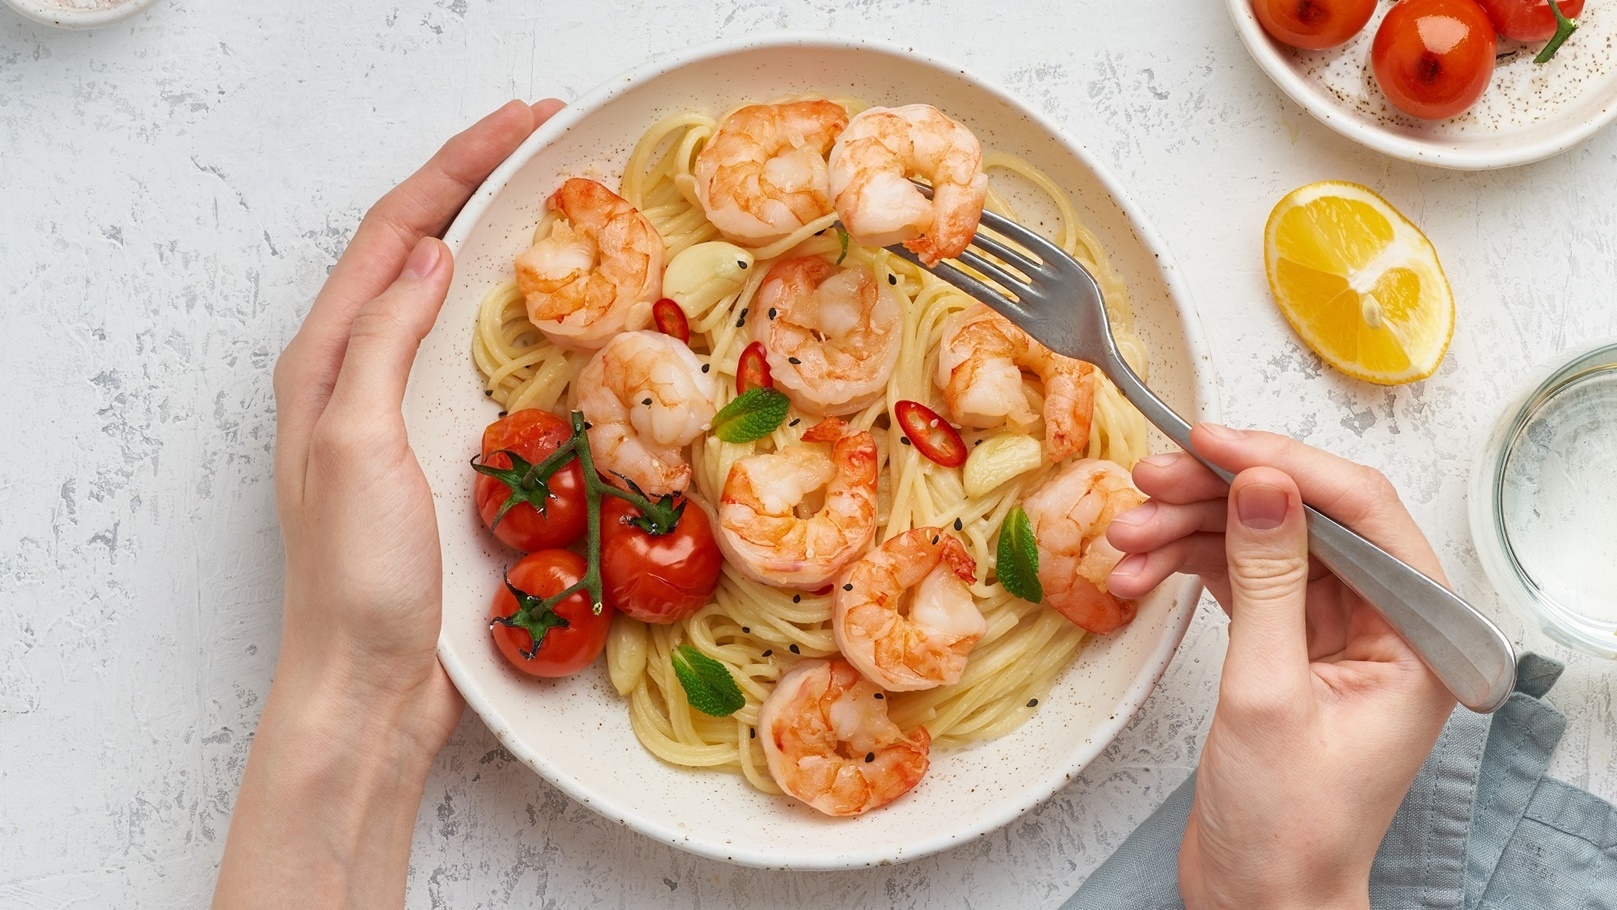 pasta-bavette-with-fried-shrimps-bechamel-sauce-2021-08-28-02-00-59-utc (1)